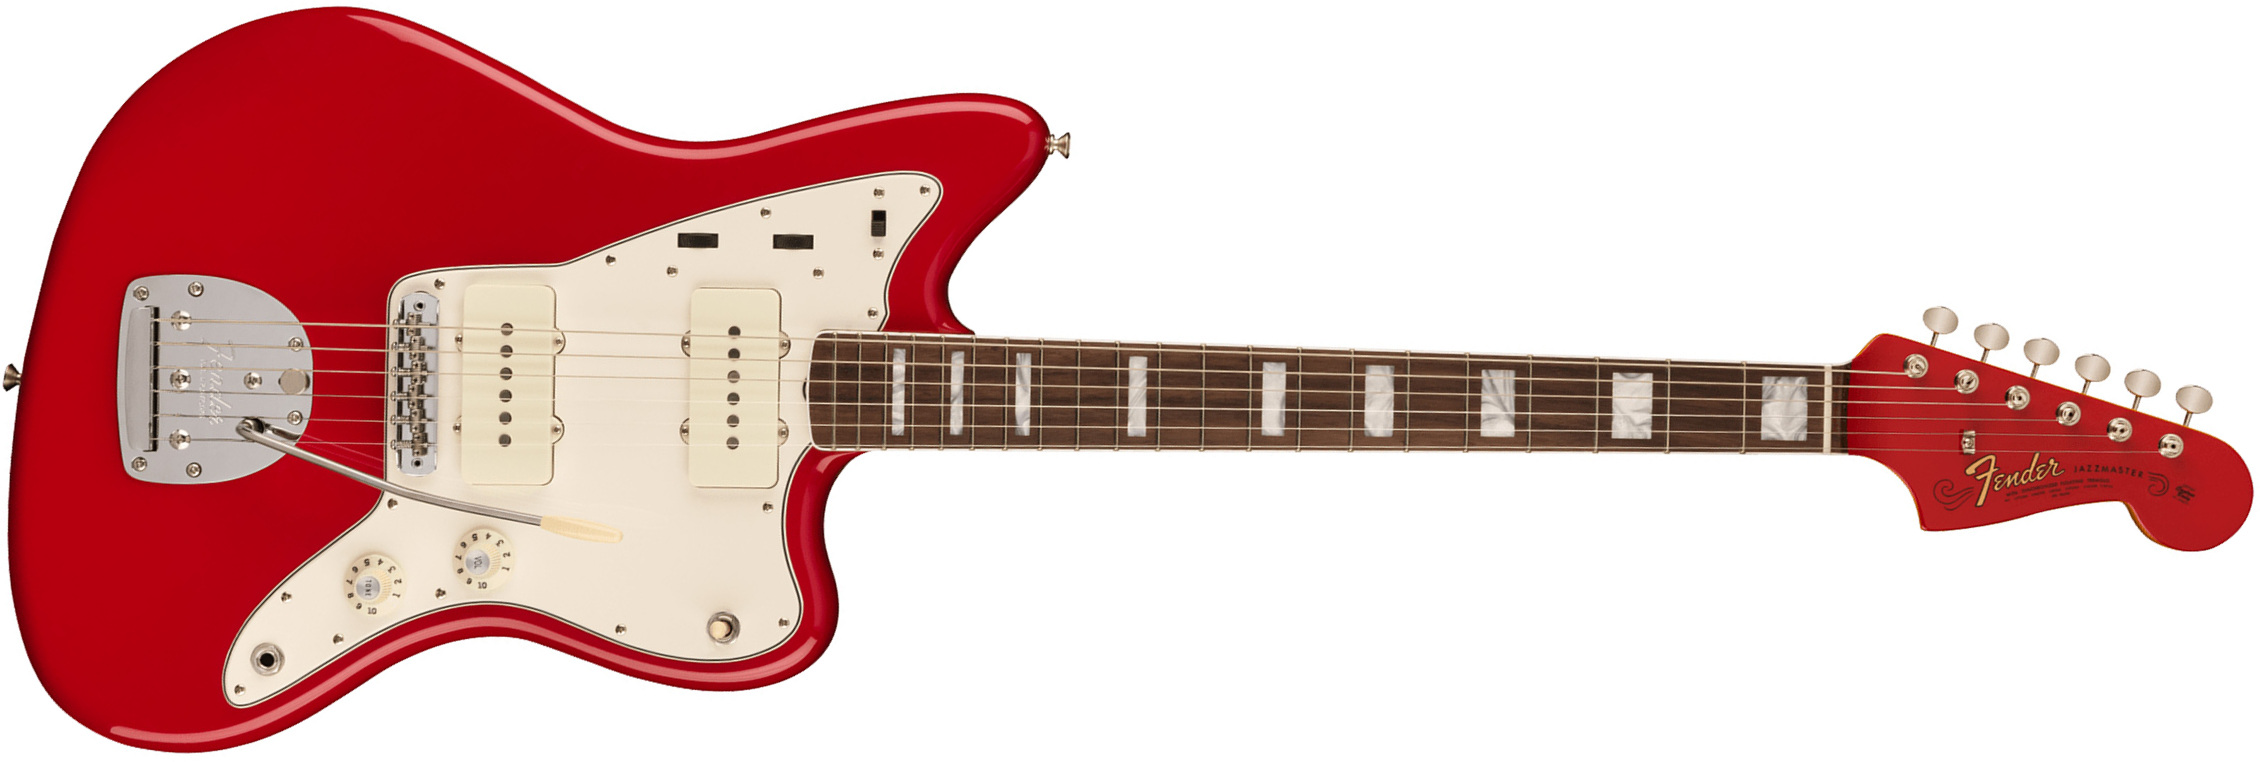 Fender Jazzmaster 1966 American Vintage Ii Usa Sh Trem Rw - Dakota Red - Retro-rock elektrische gitaar - Main picture